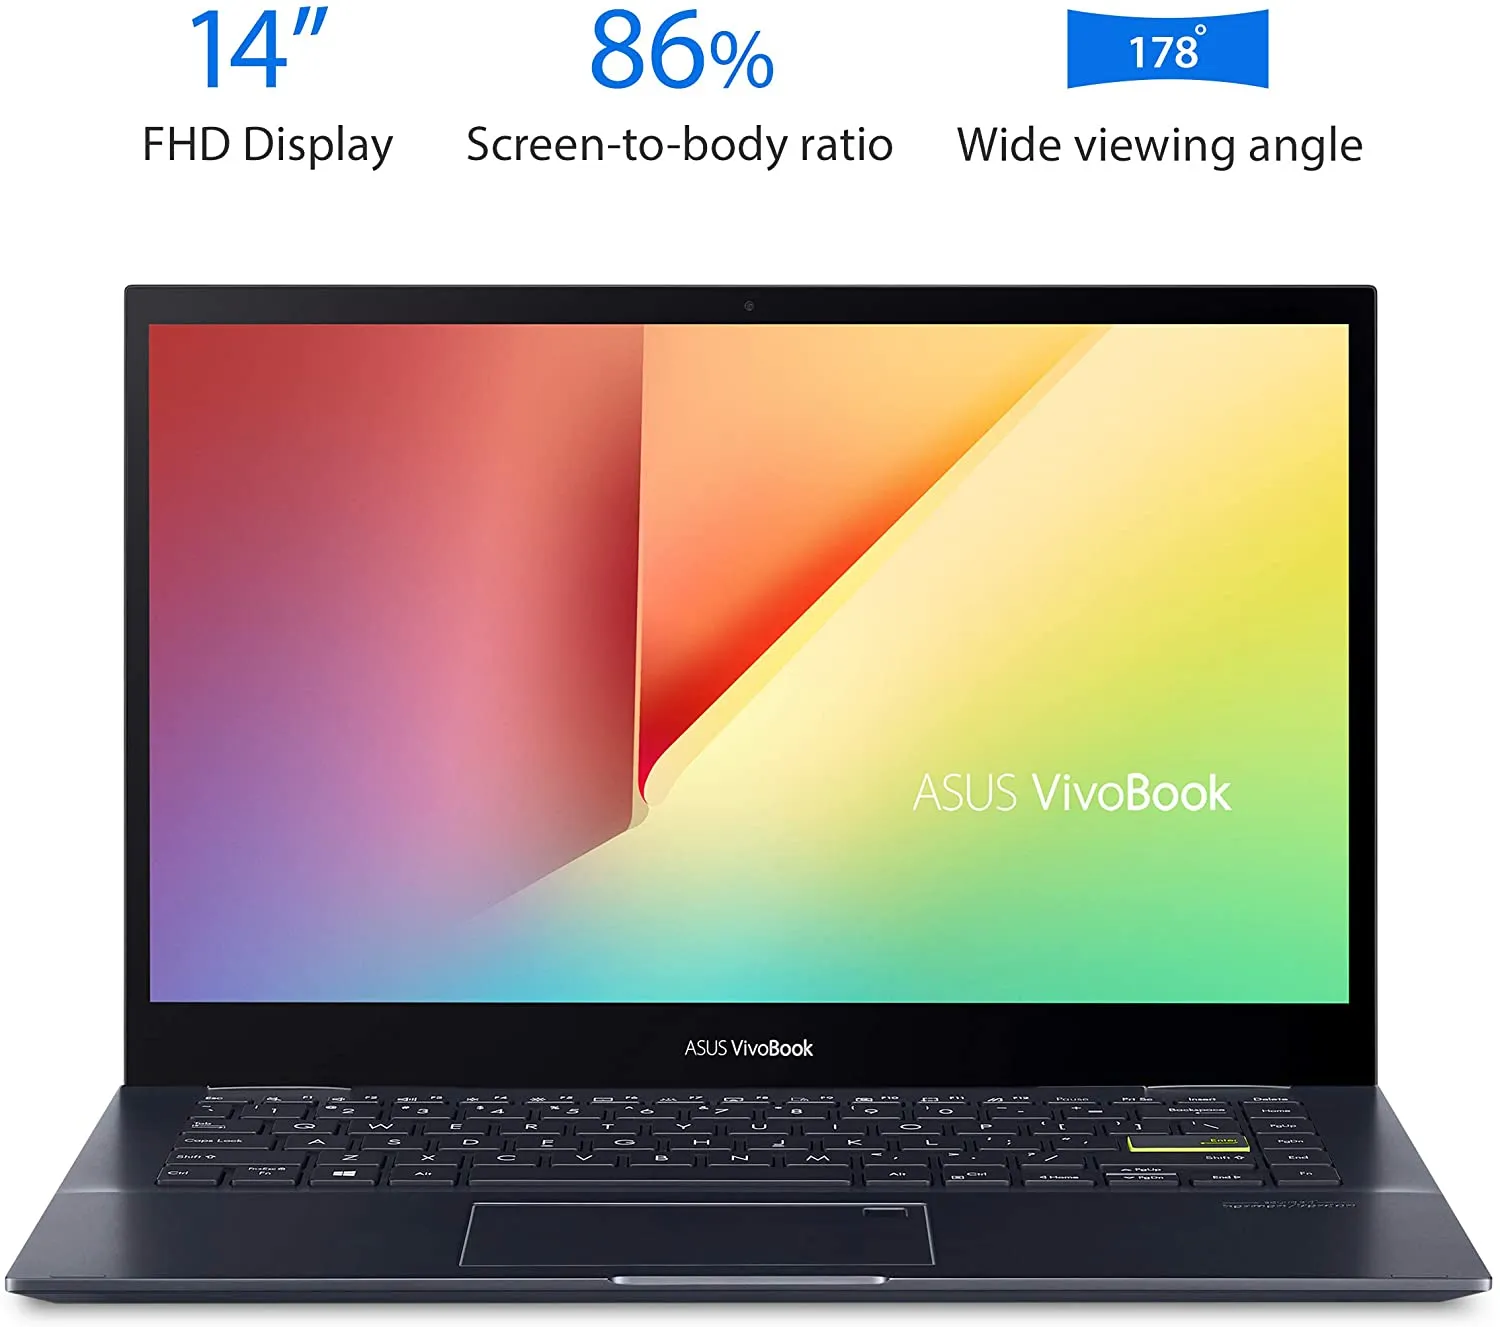 Asus VivoBook TM420U-WS51T, AMD Ryzen 5-5500U, 8GB RAM 256GB SSD, 14â€ FHD Touchscreen, AMD Radeon Graphics, Windows 10H. Black. English Keyboard